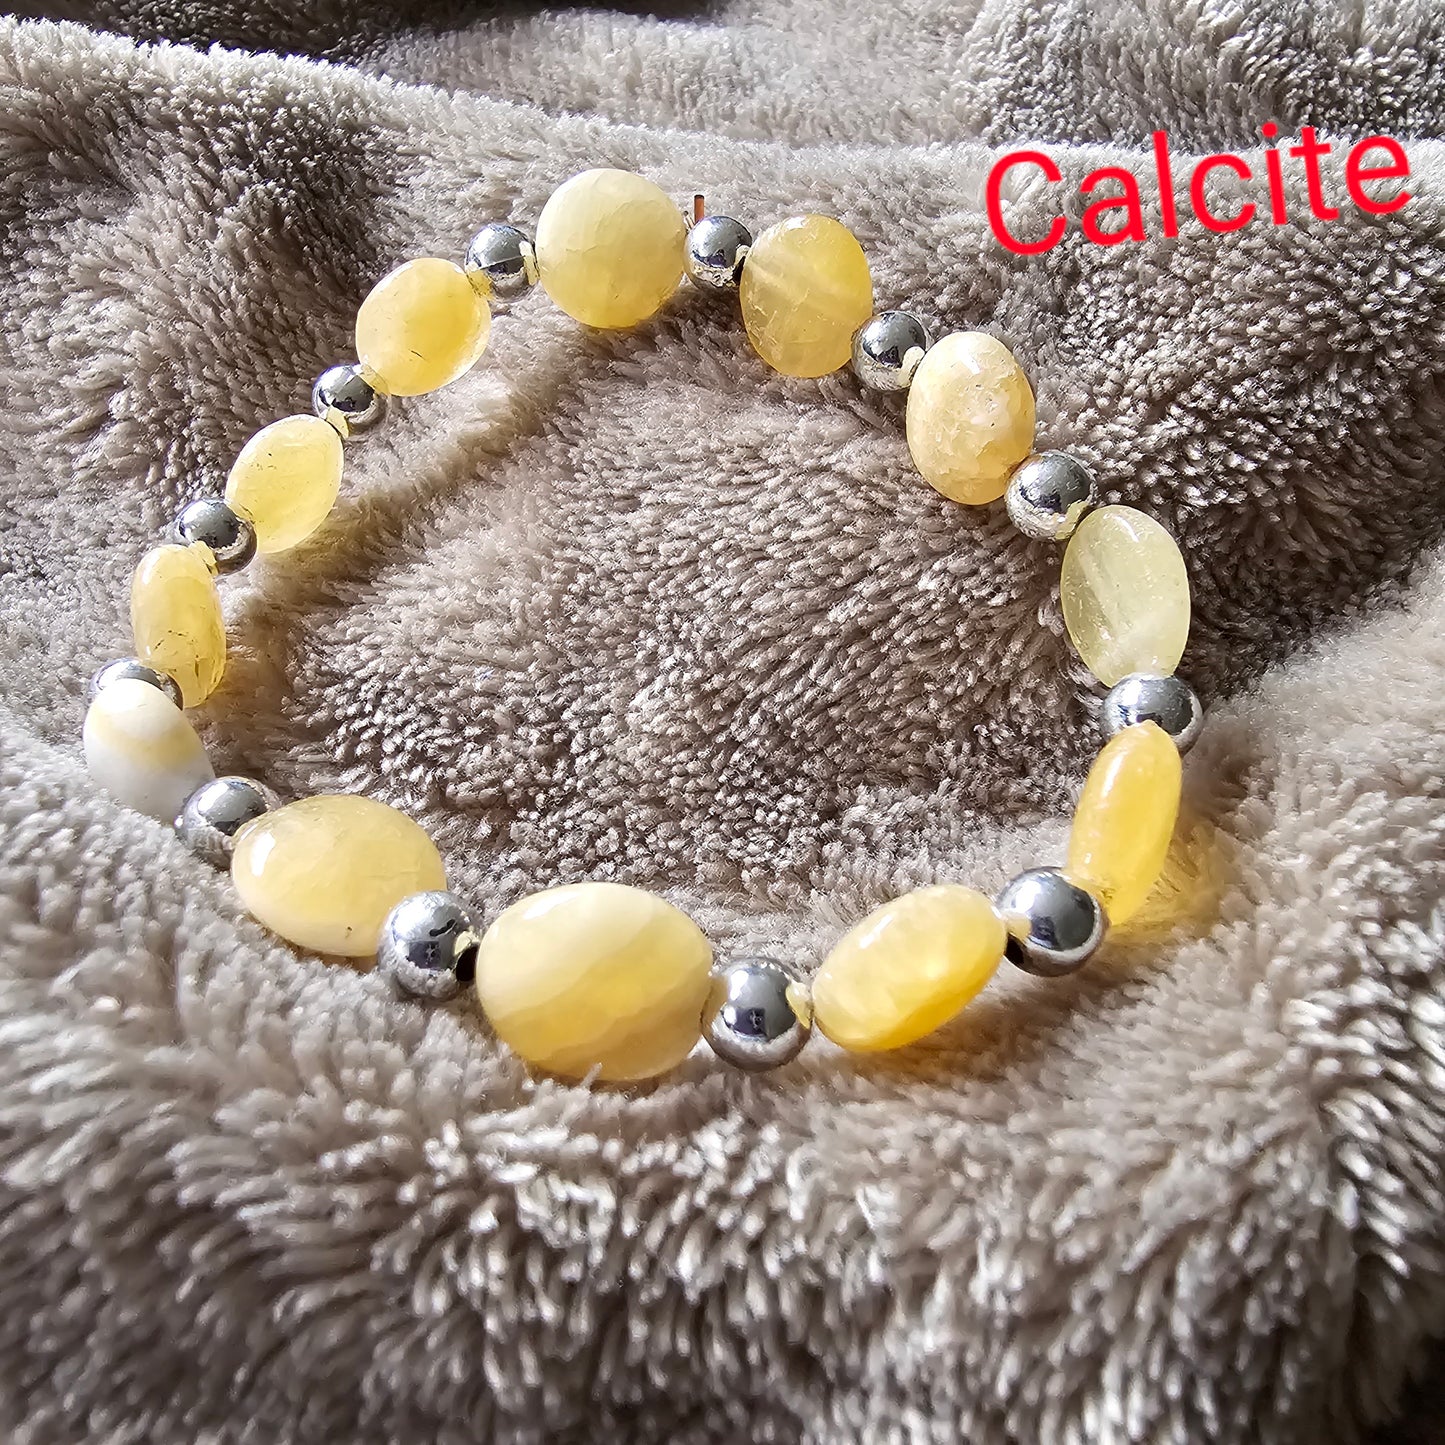 Calcite Bracelet